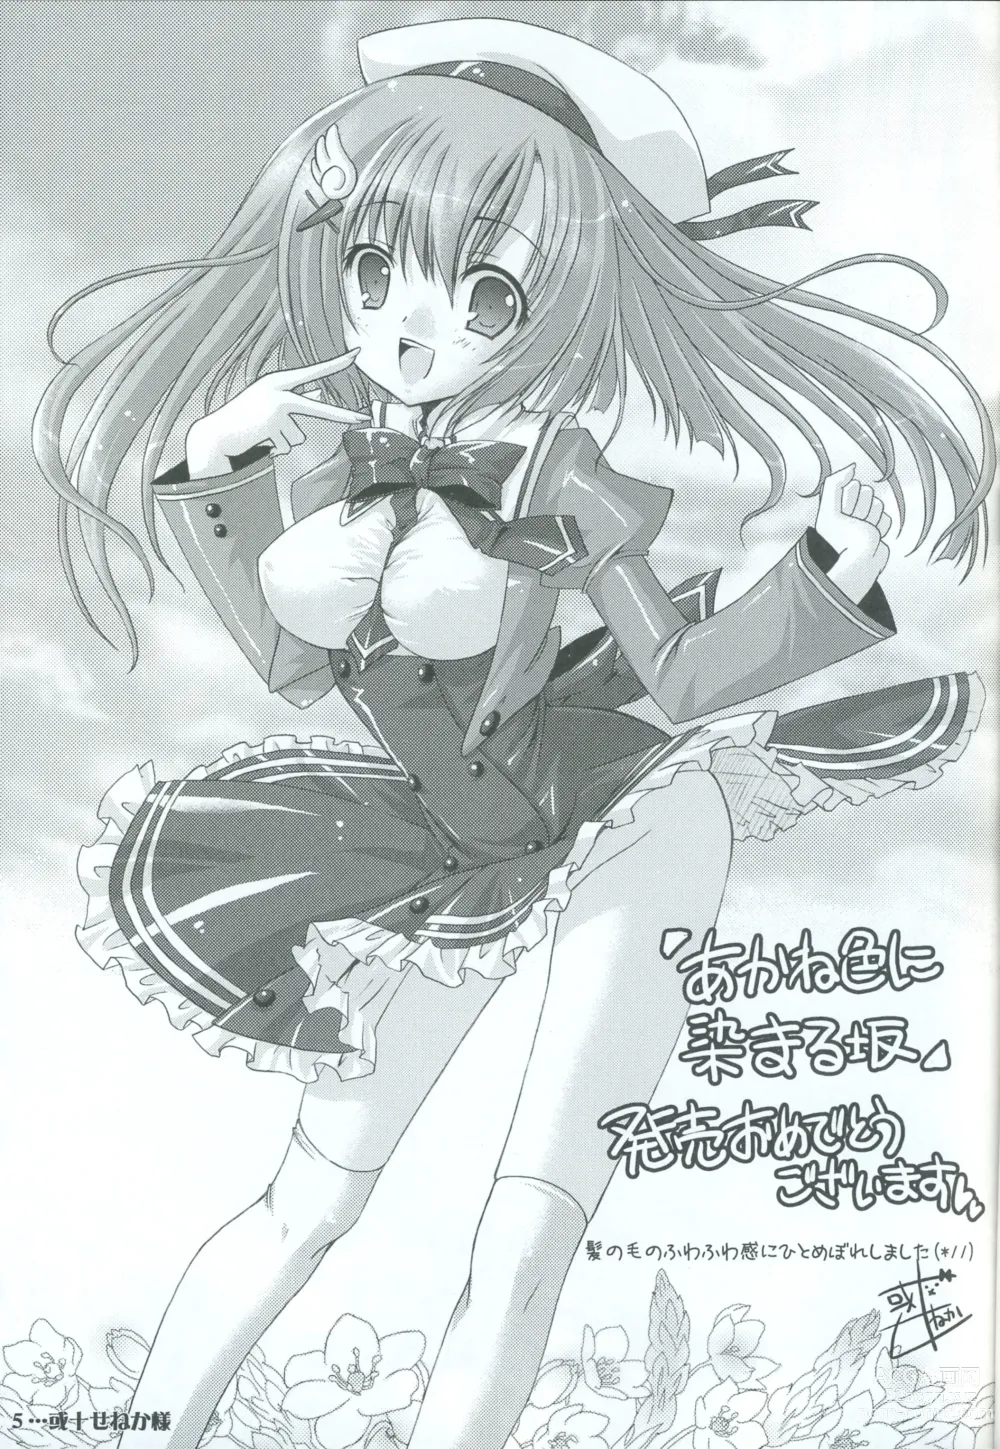 Page 6 of manga Akaneiro ni Somaru Saka SPECIAL GUESTS ILLUSTRATIONS